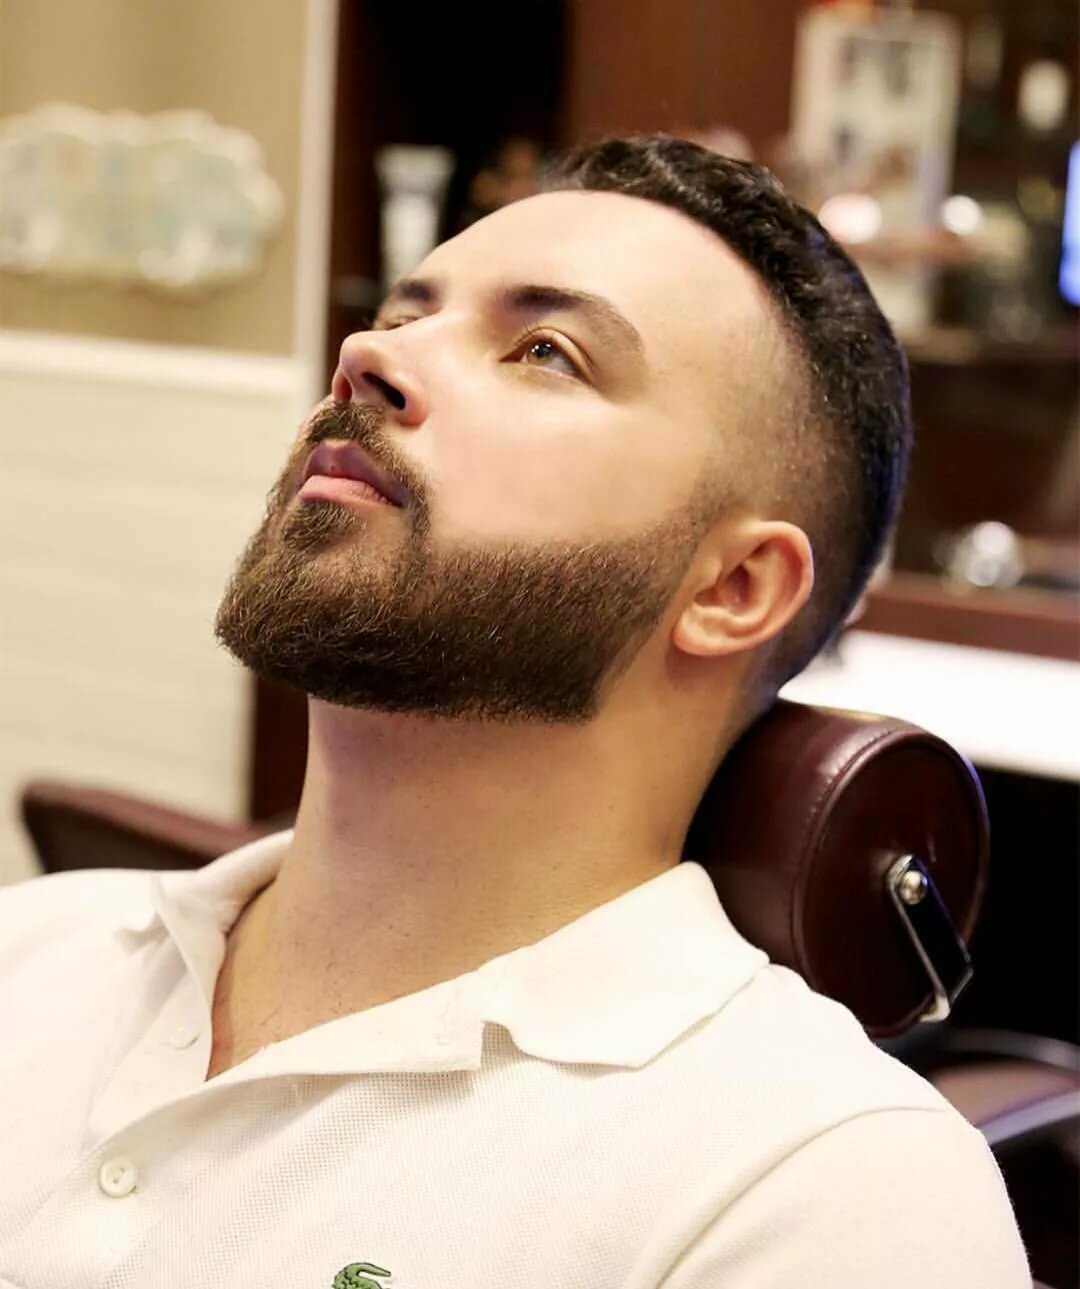 Борода без усов: виды и 15 фото с вариантами бородок для мужчин